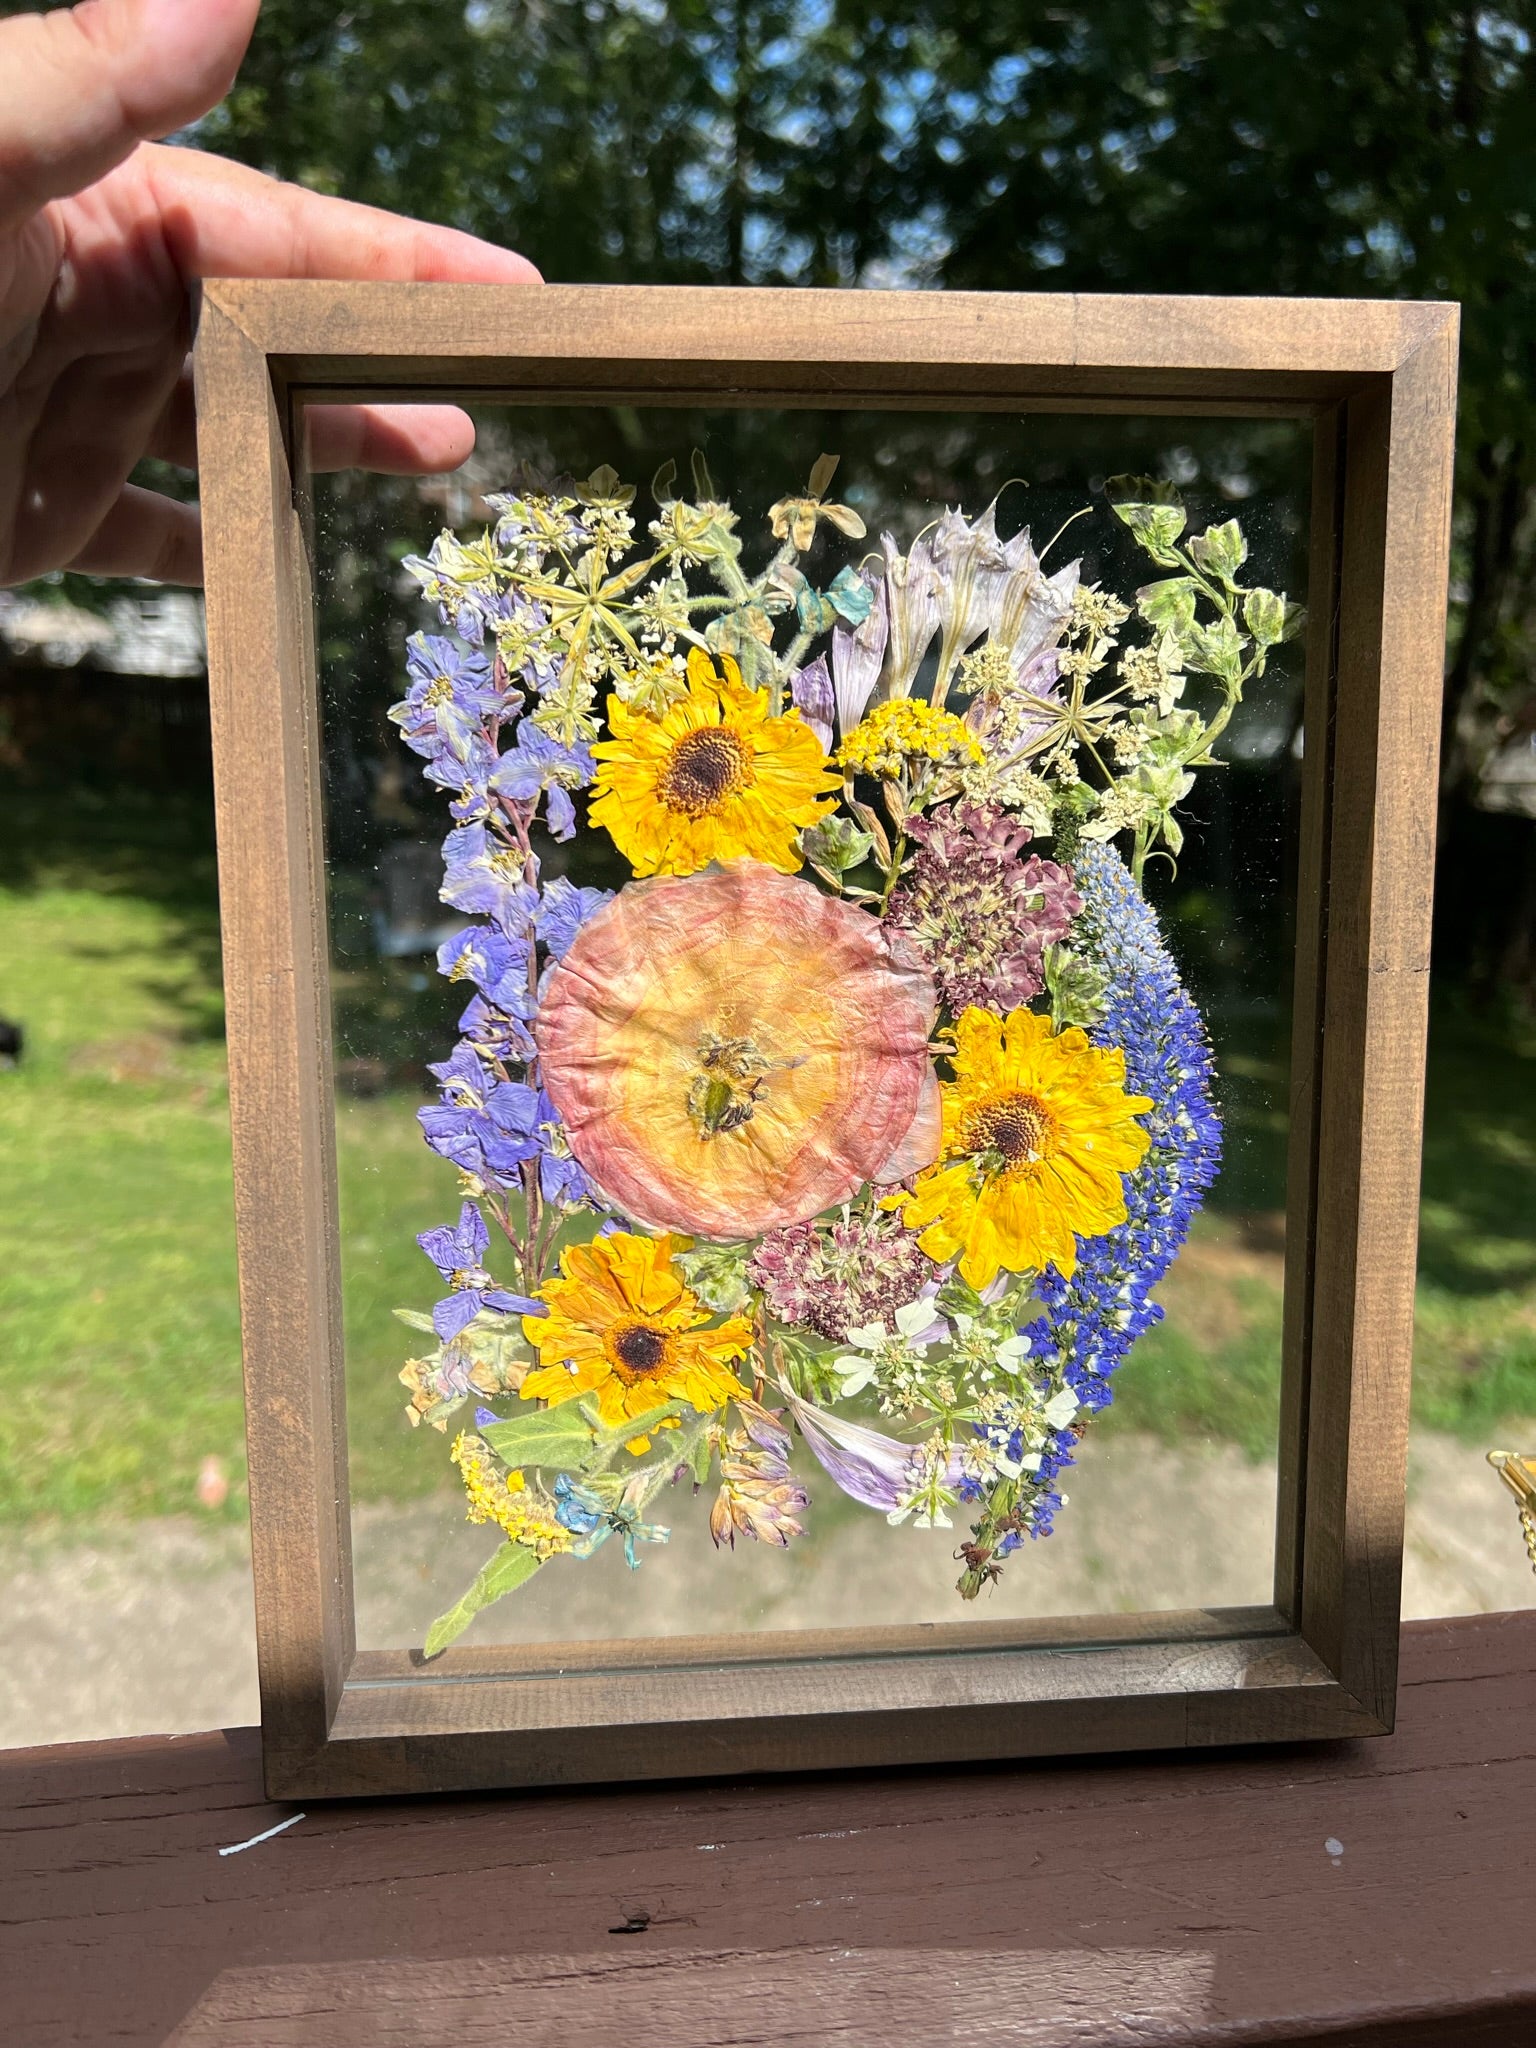 Need help finding frames for pressed flowers : r/PressedFlowers